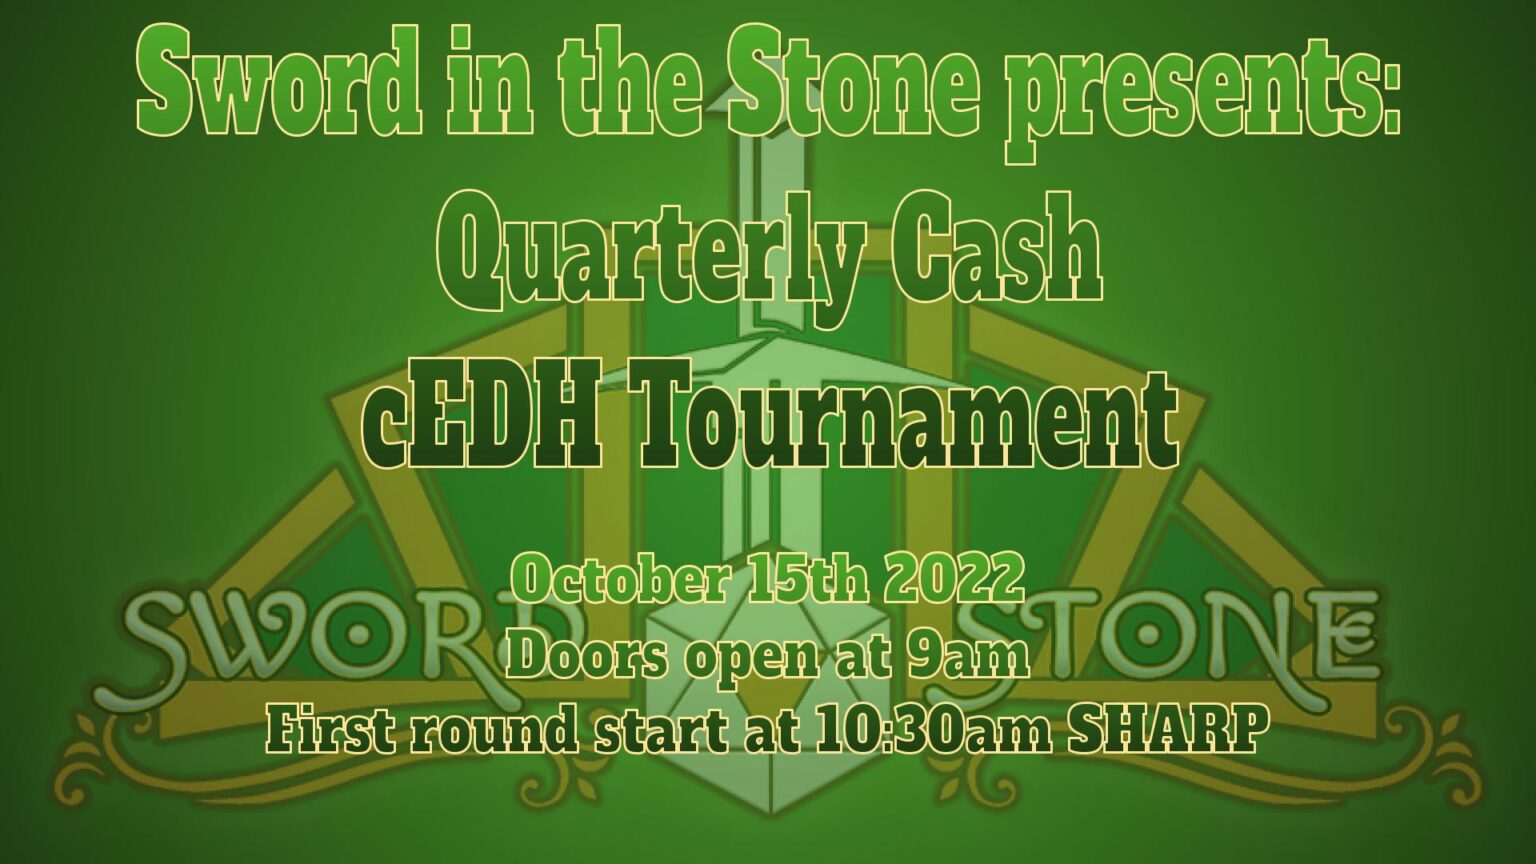 quarterly-cash-cedh-tournament-10-15-2022-sword-in-the-stone-games